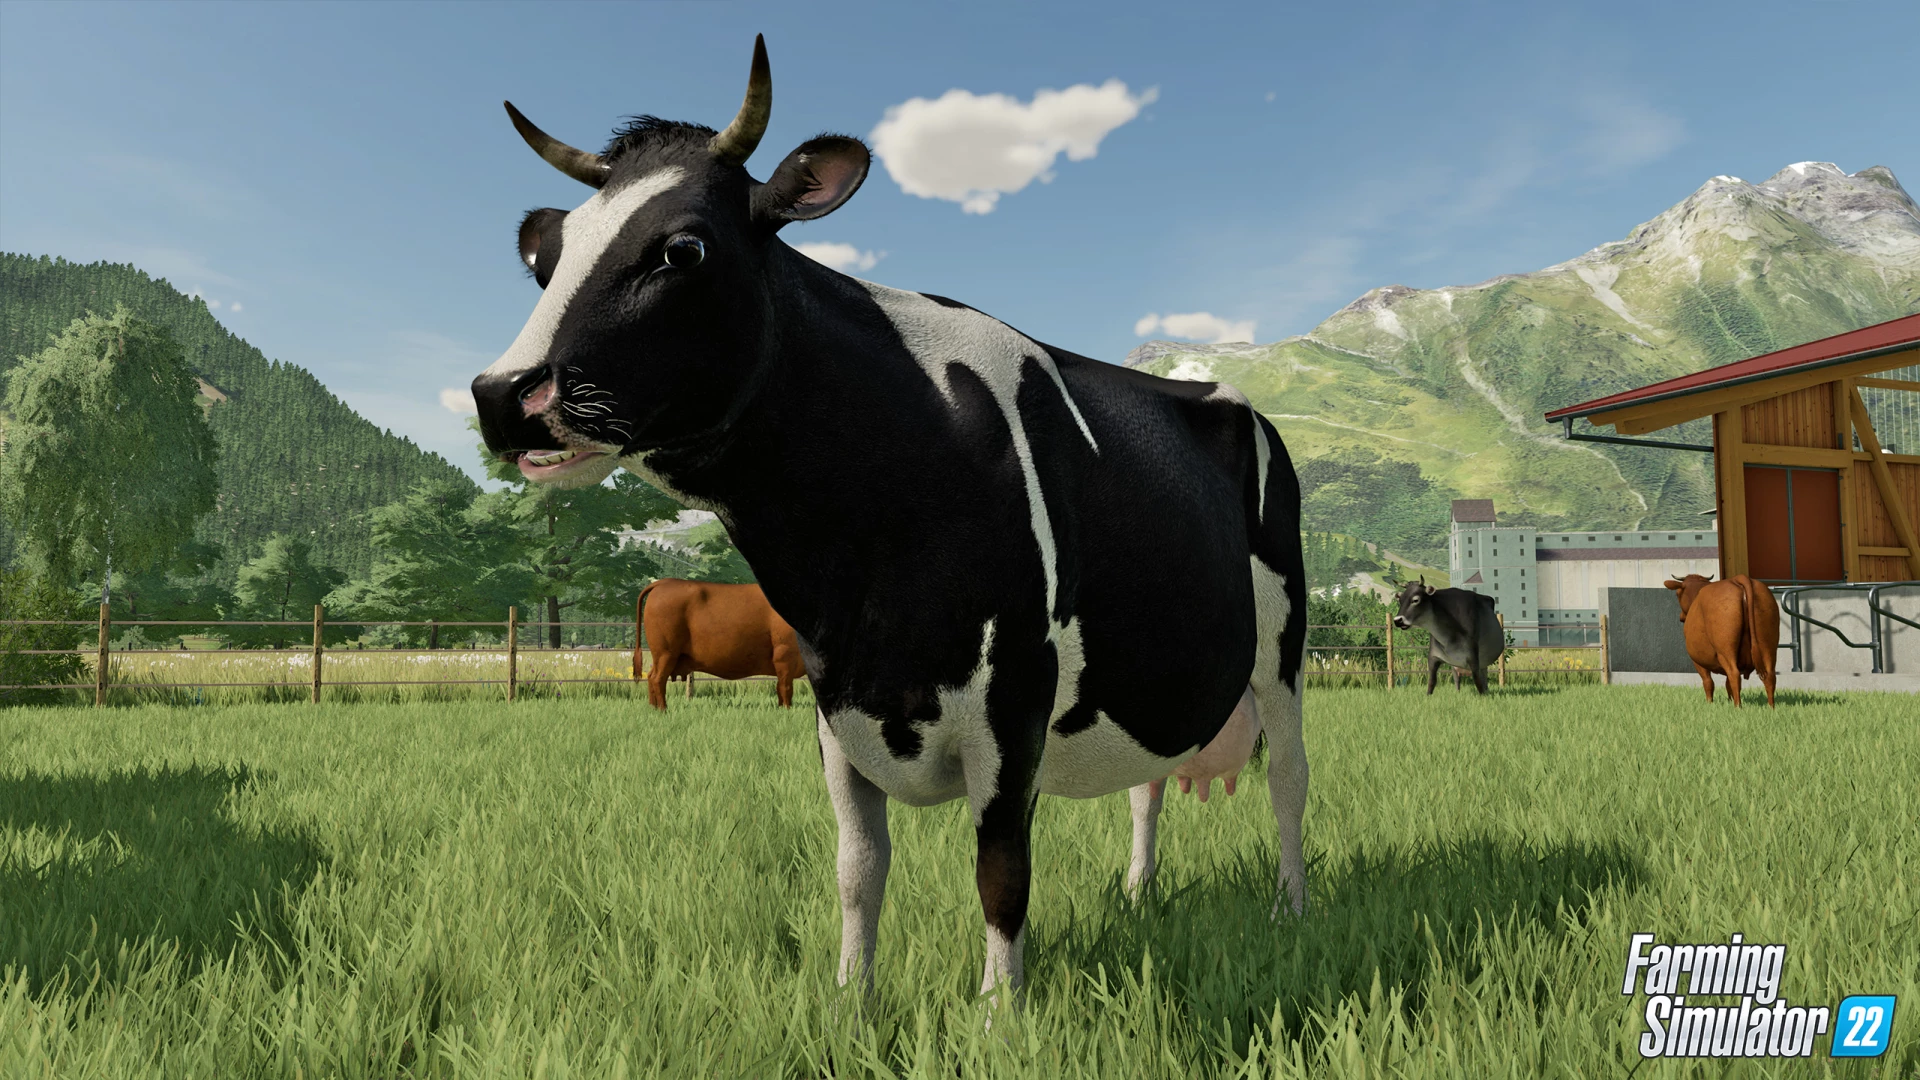 Farming Simulator 22 – Animals Guide